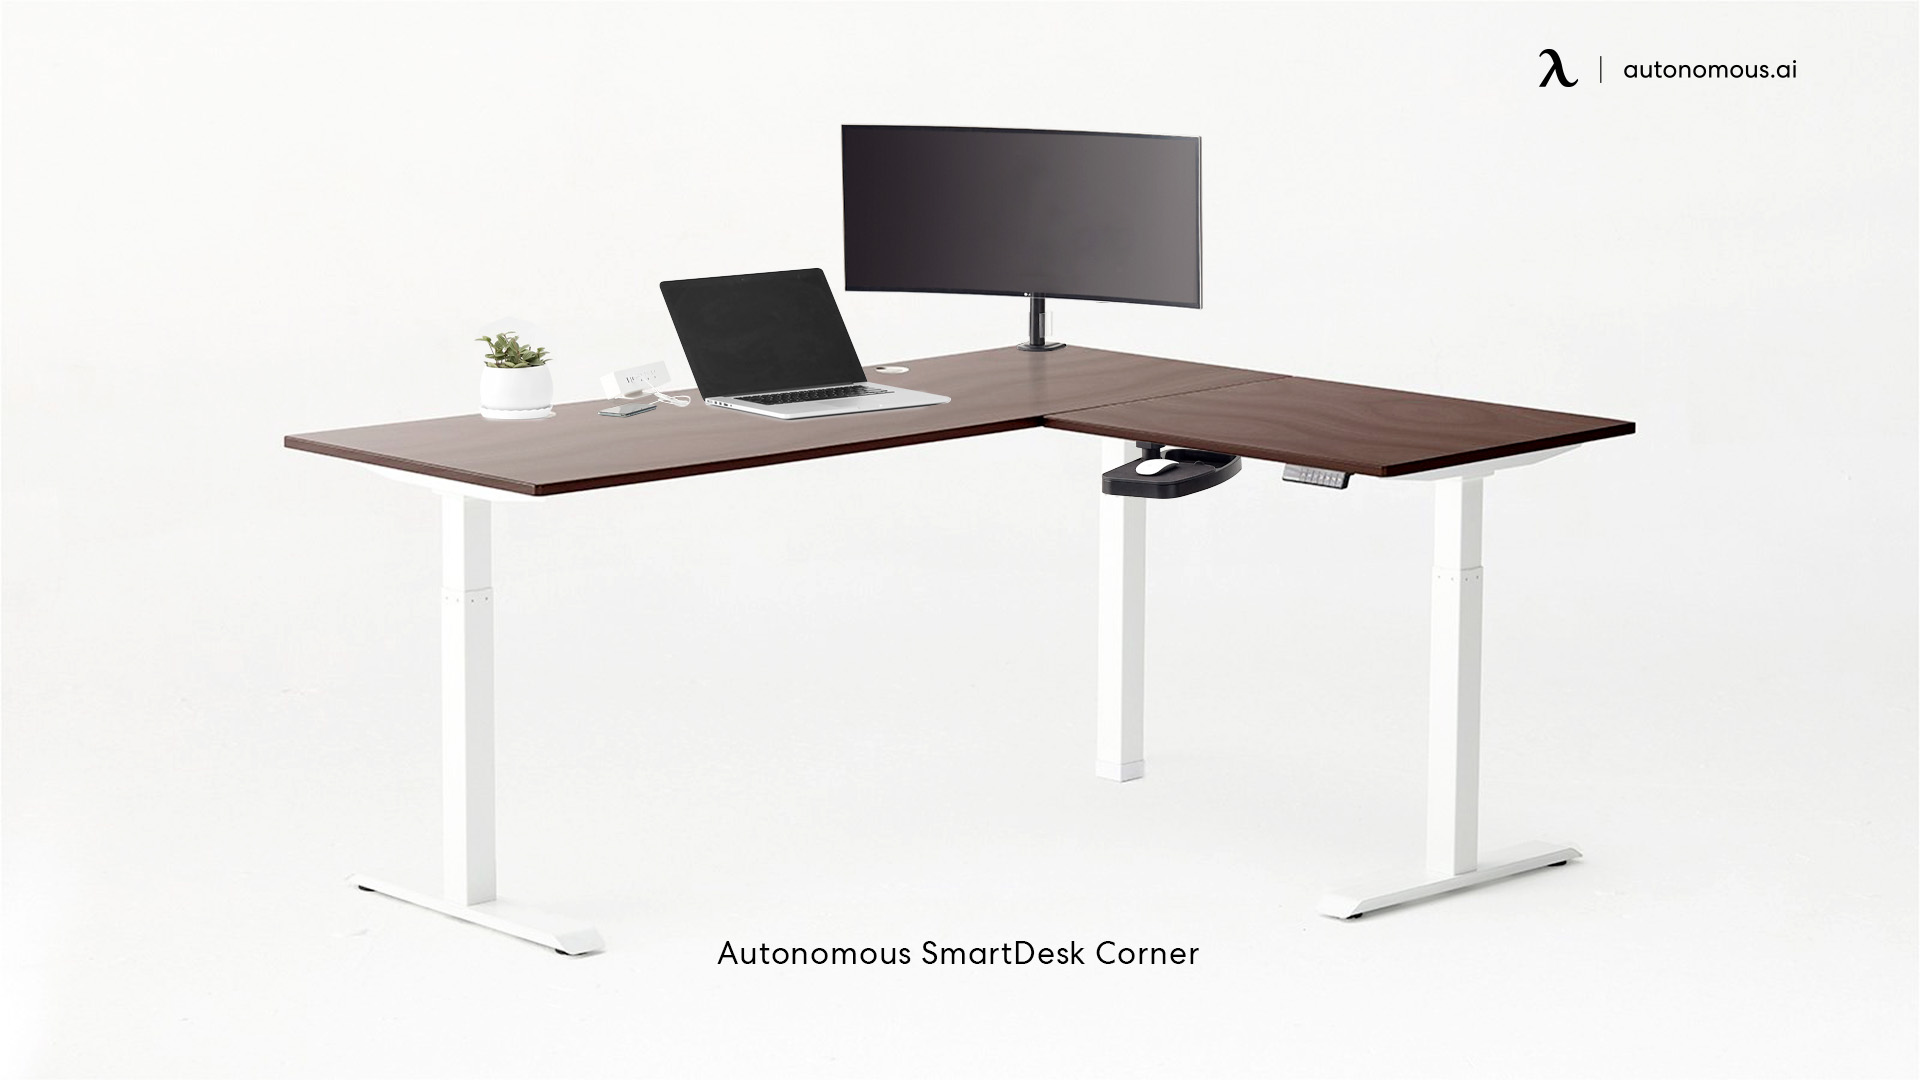 Autonomous SmartDesk Corner